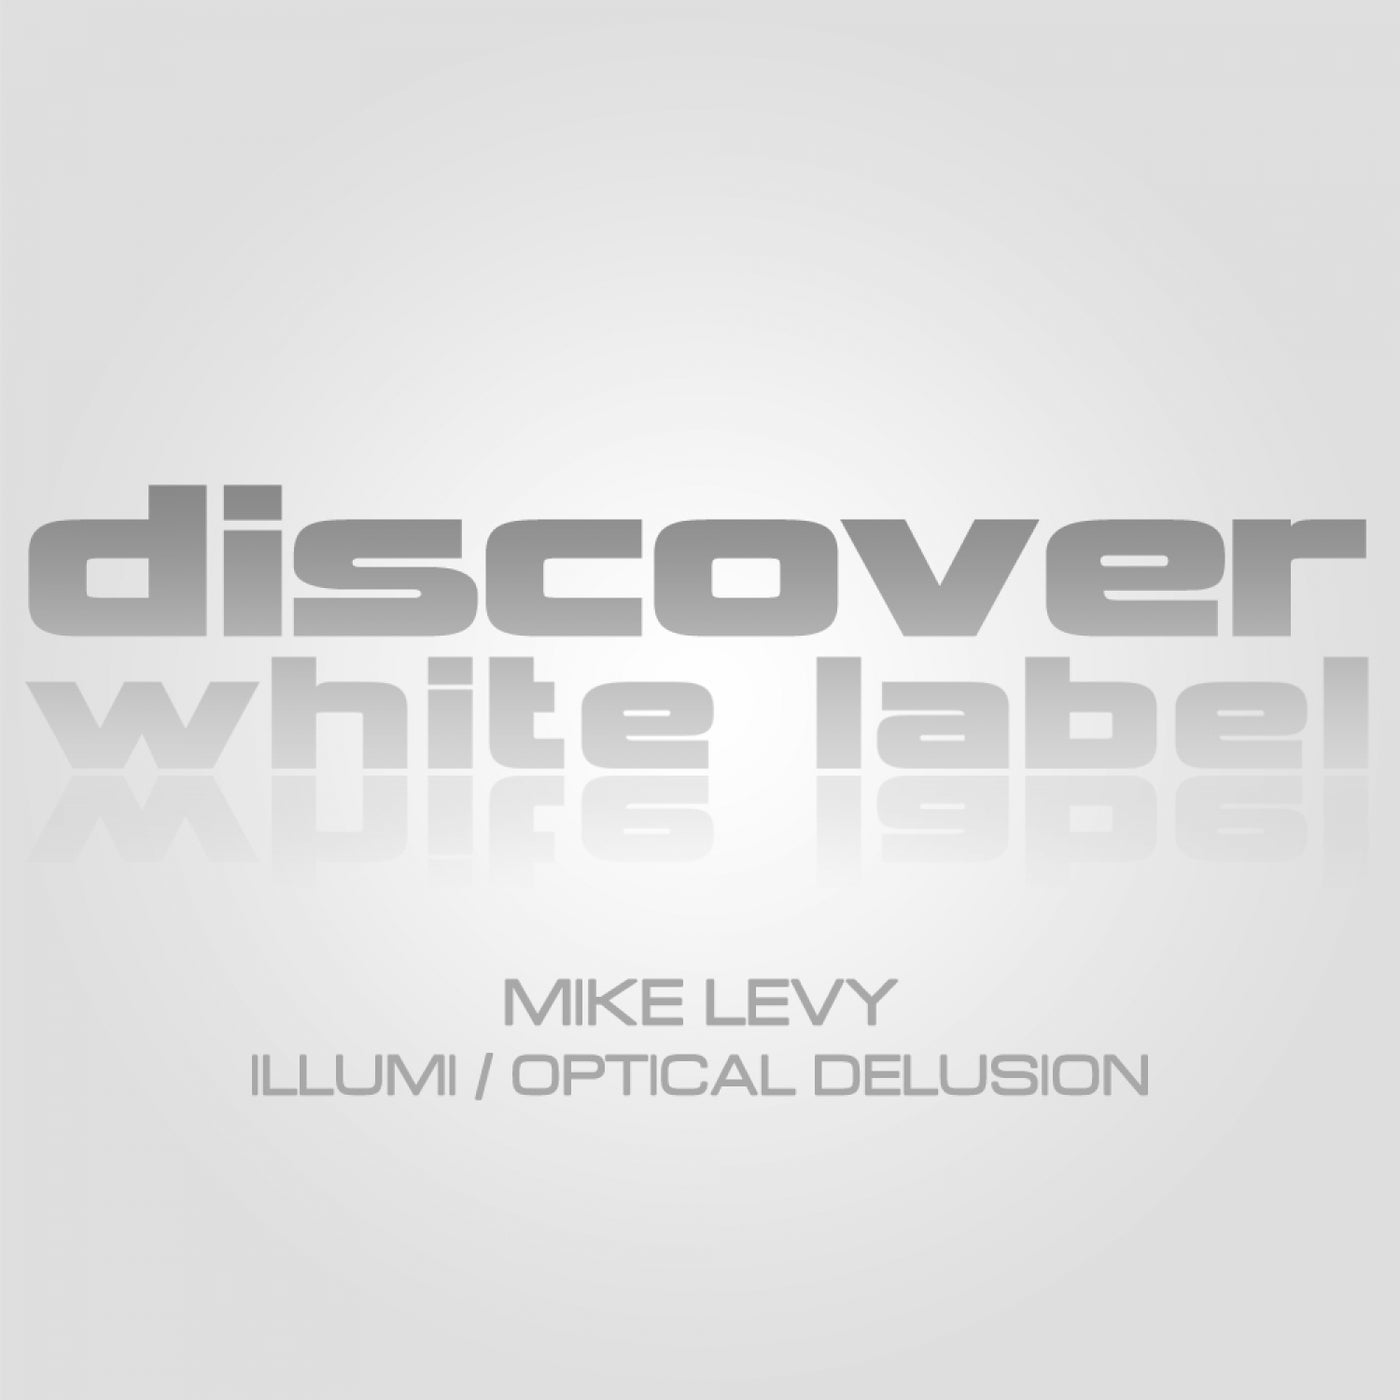 Illumi / Optical Delusion